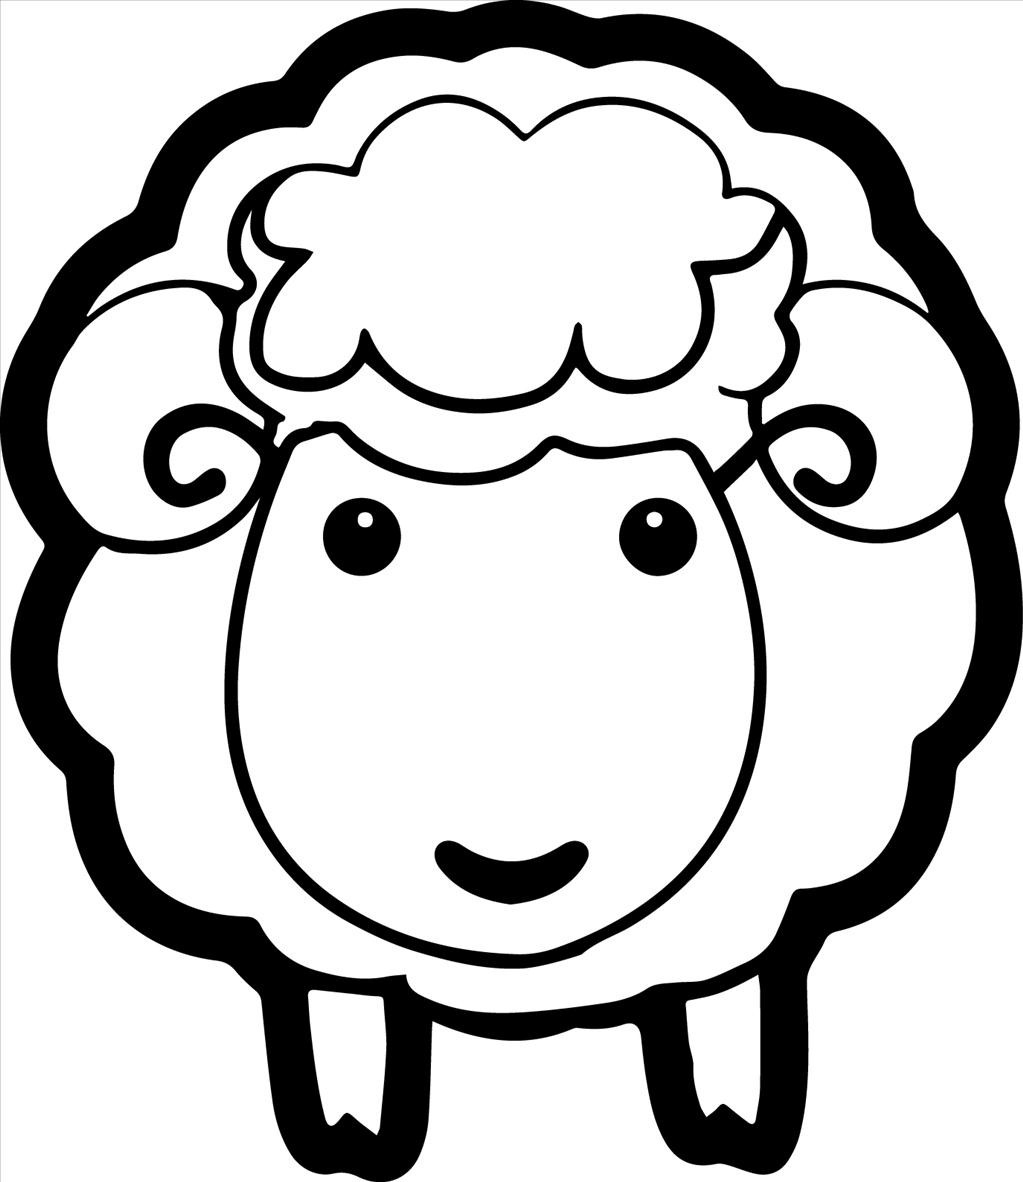 Cute Sheep Coloring Page at Free printable colorings